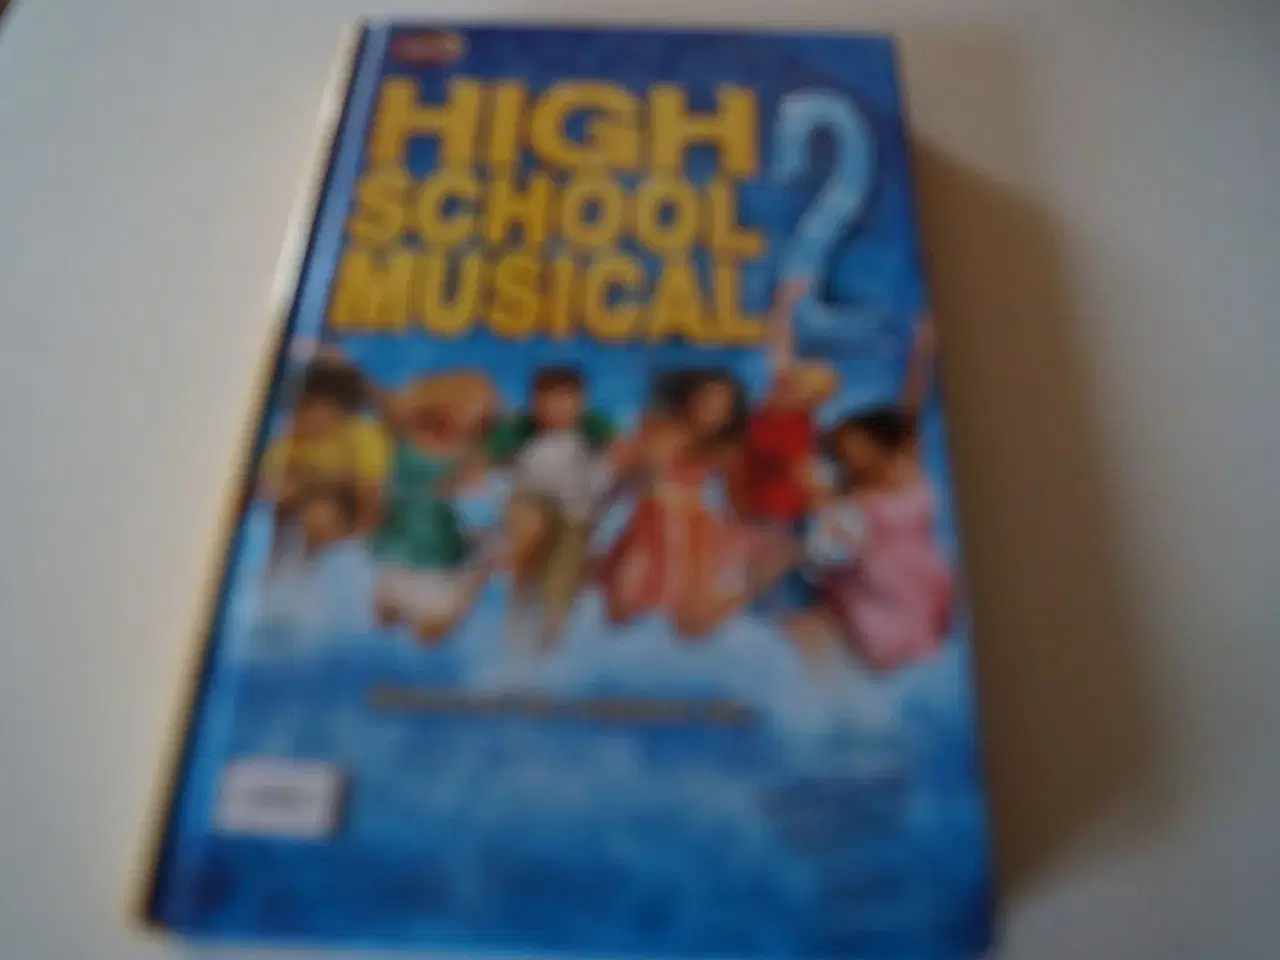 Billede 2 - Highschool musical 2